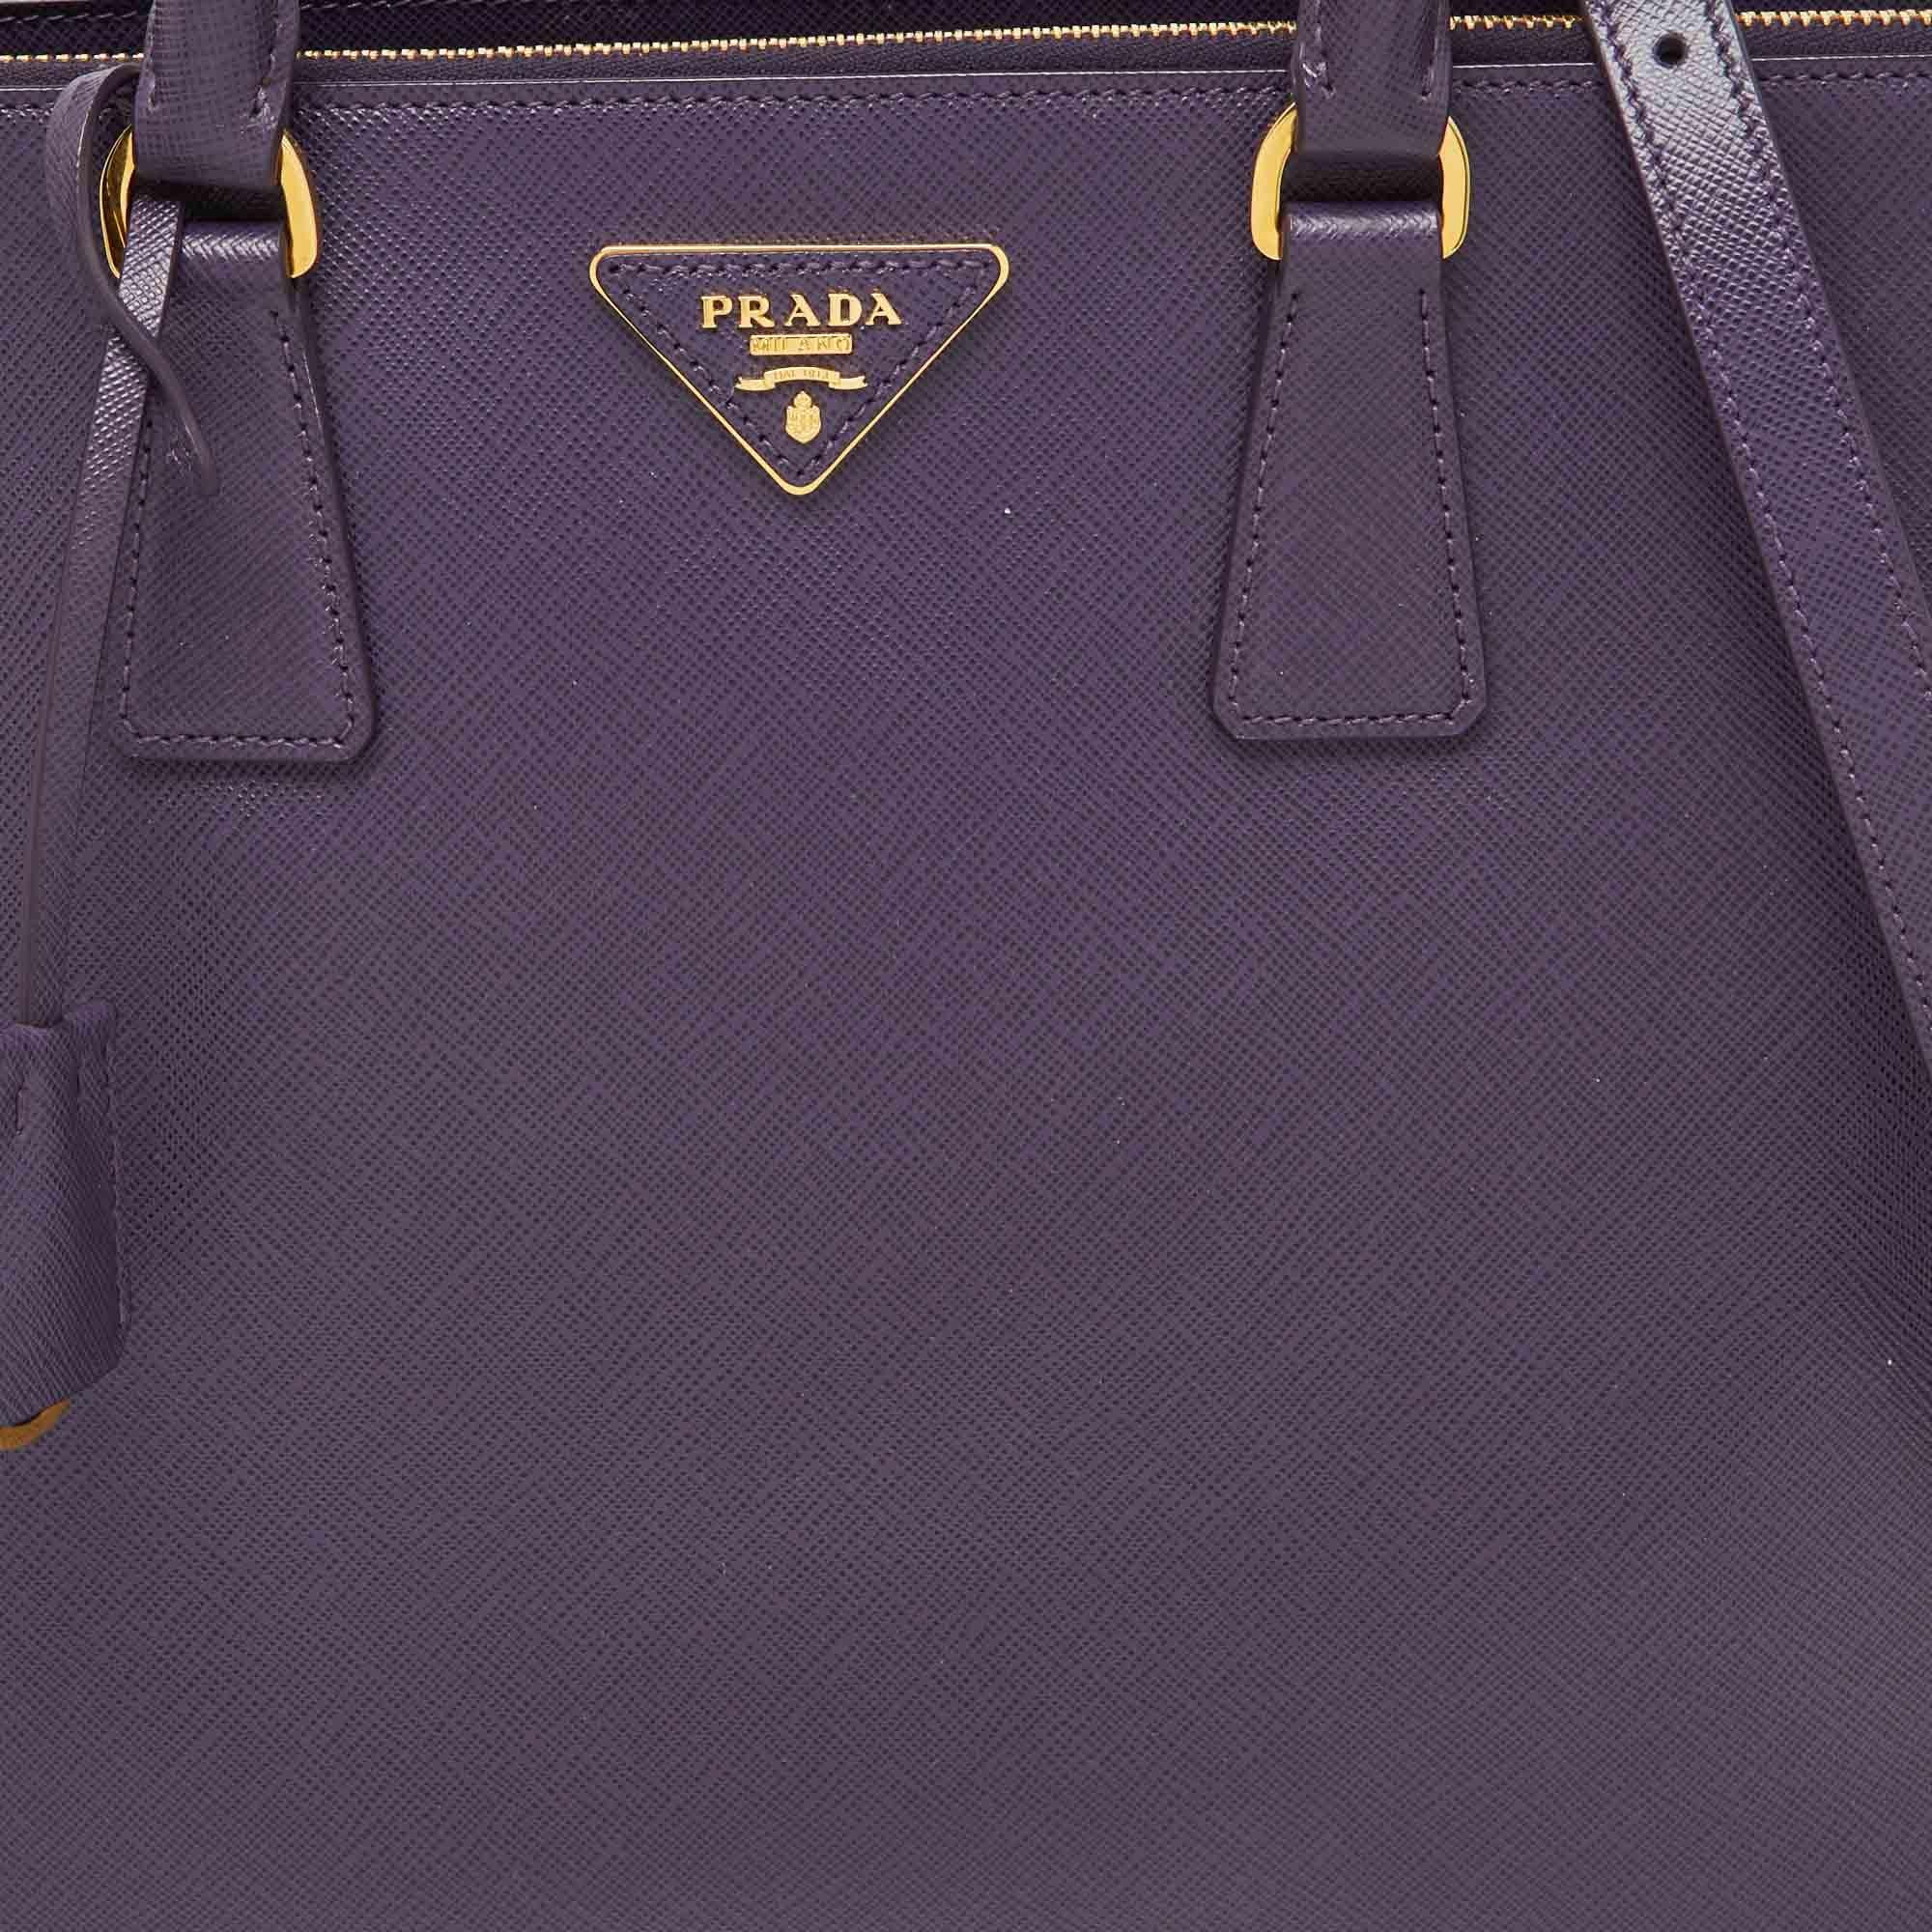 Prada Purple Saffiano Leather Large Double Zip Tote 8